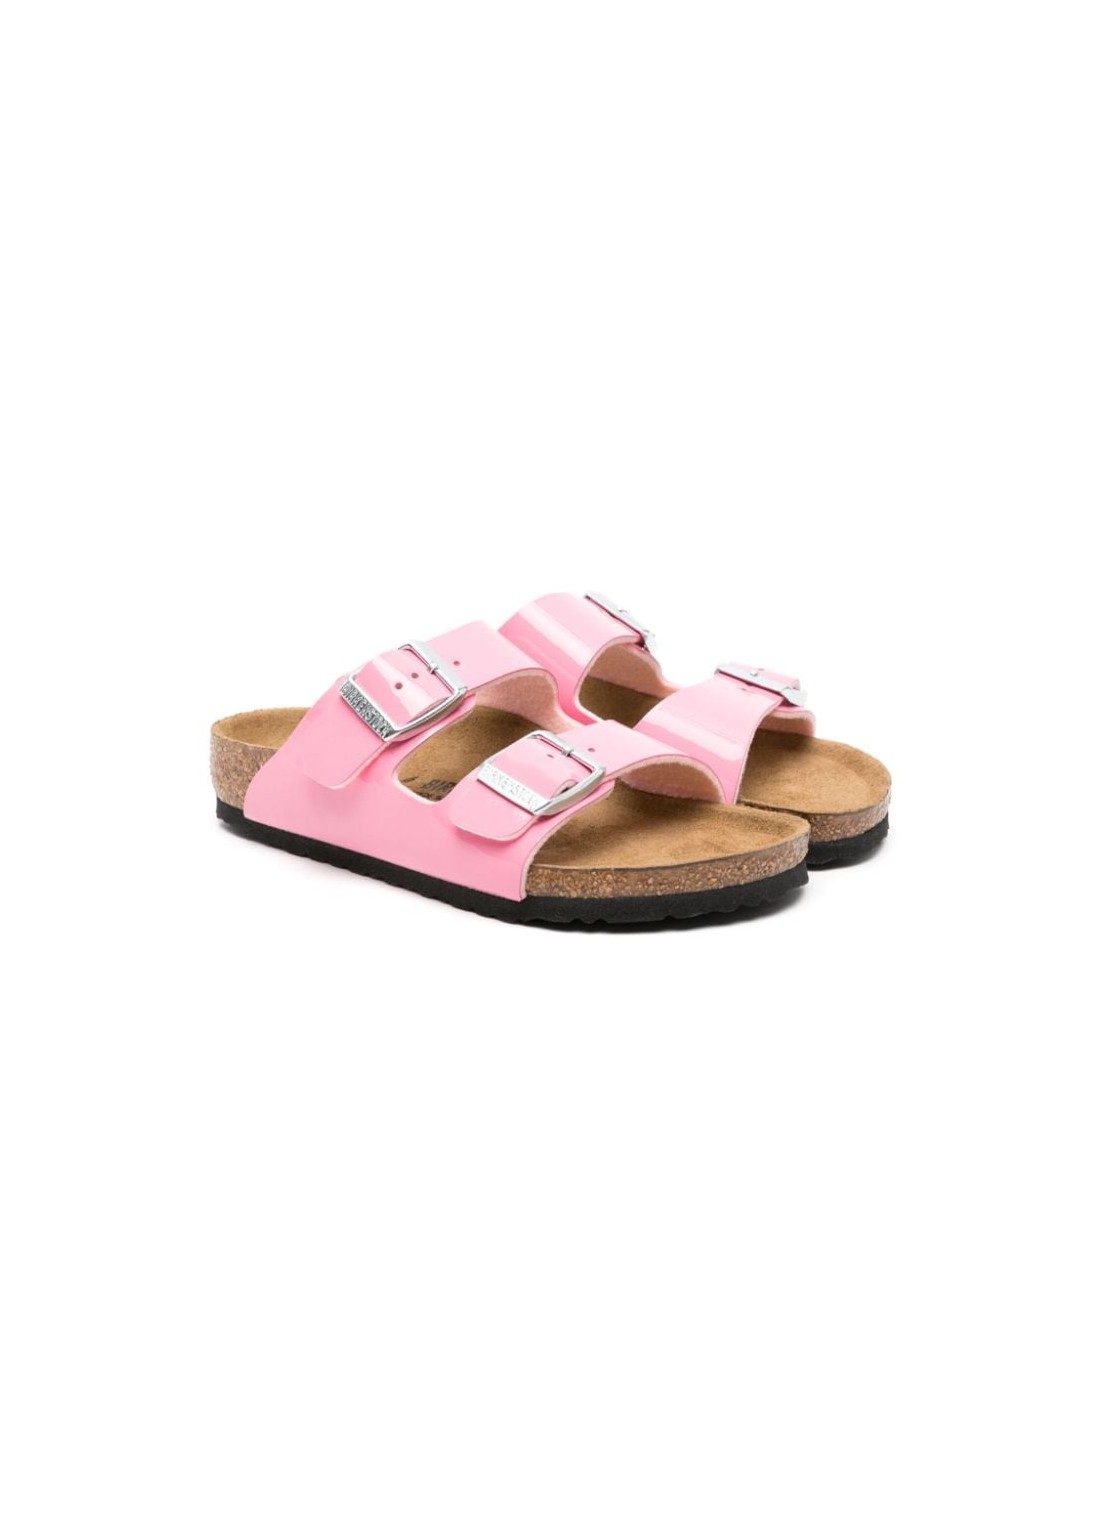 Sandalia birkenstock sandal manarizona kids bf - 1027133 patent candy pink talla rosa
 